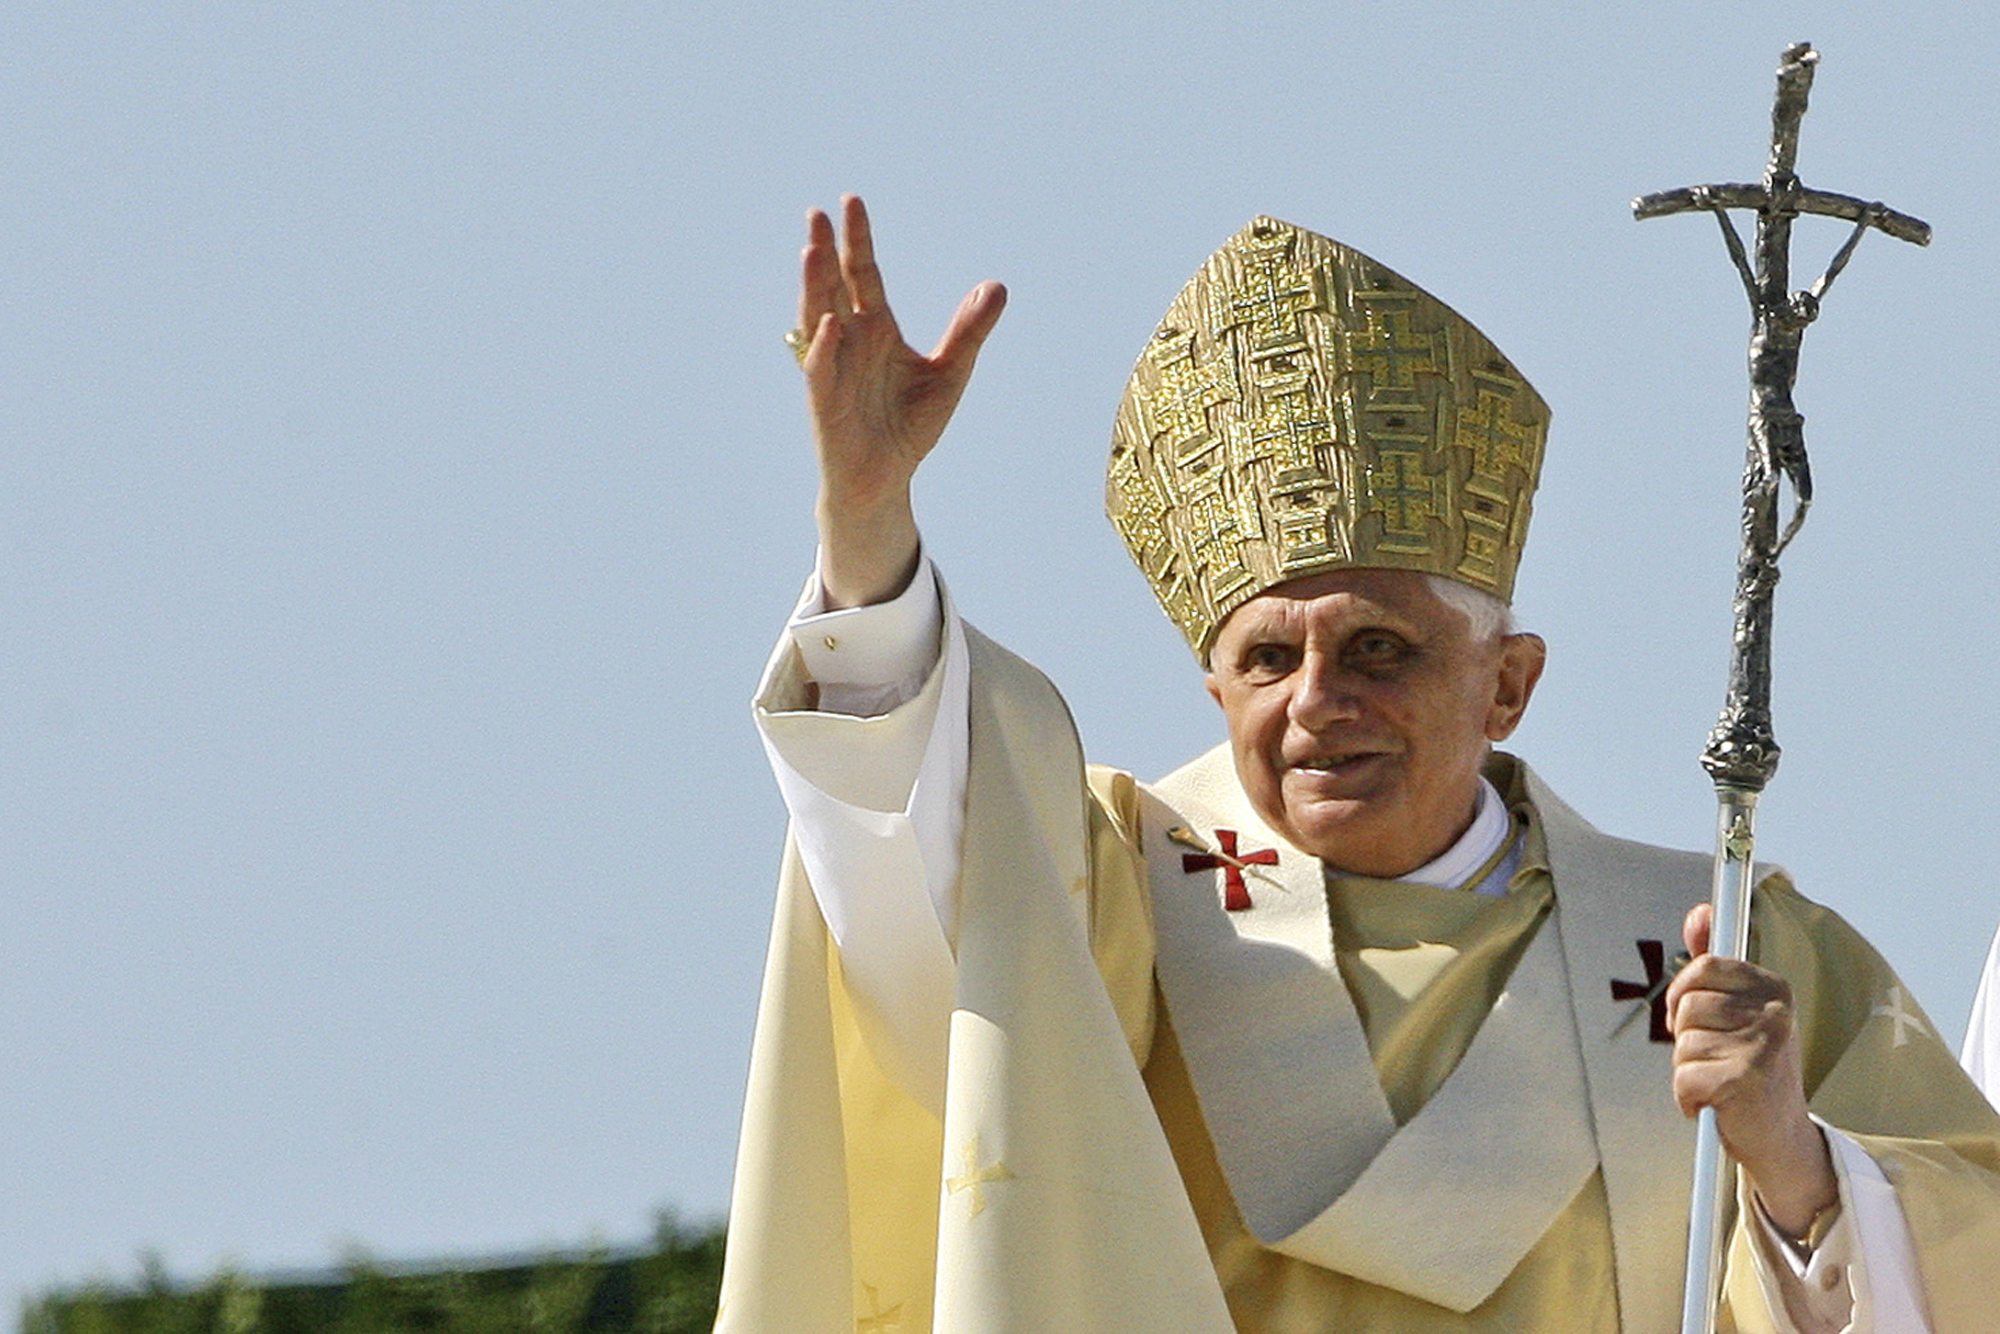 Remembering Pope Benedict